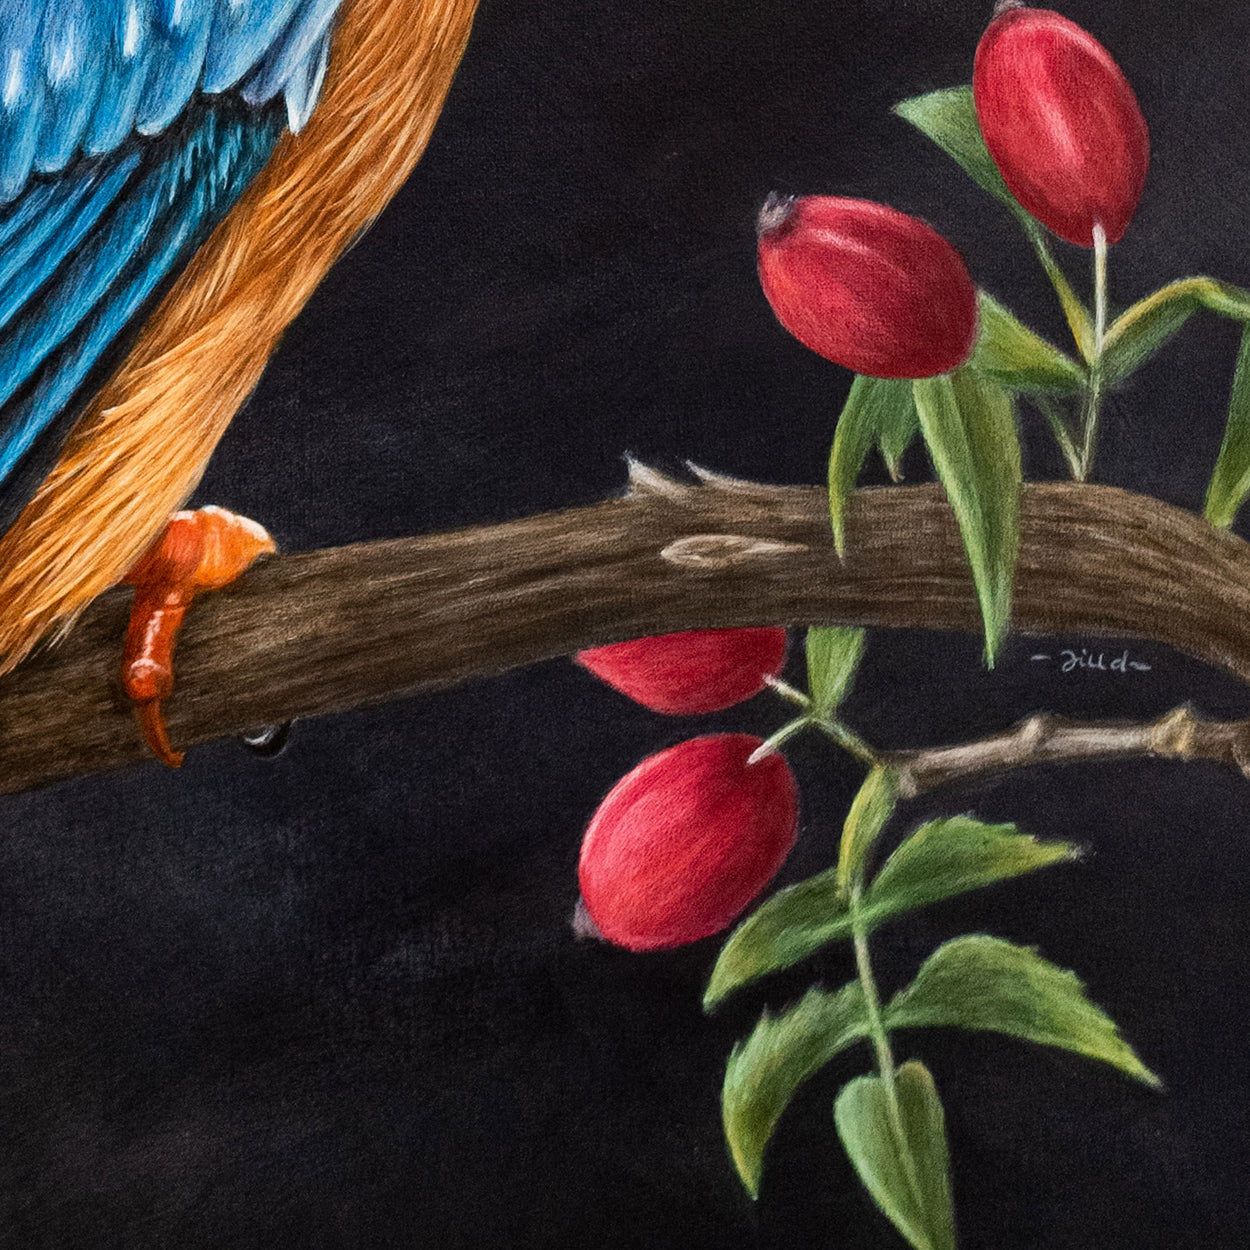 Kingfisher Painting Close-up 4 - Jill Dimond Bird Art